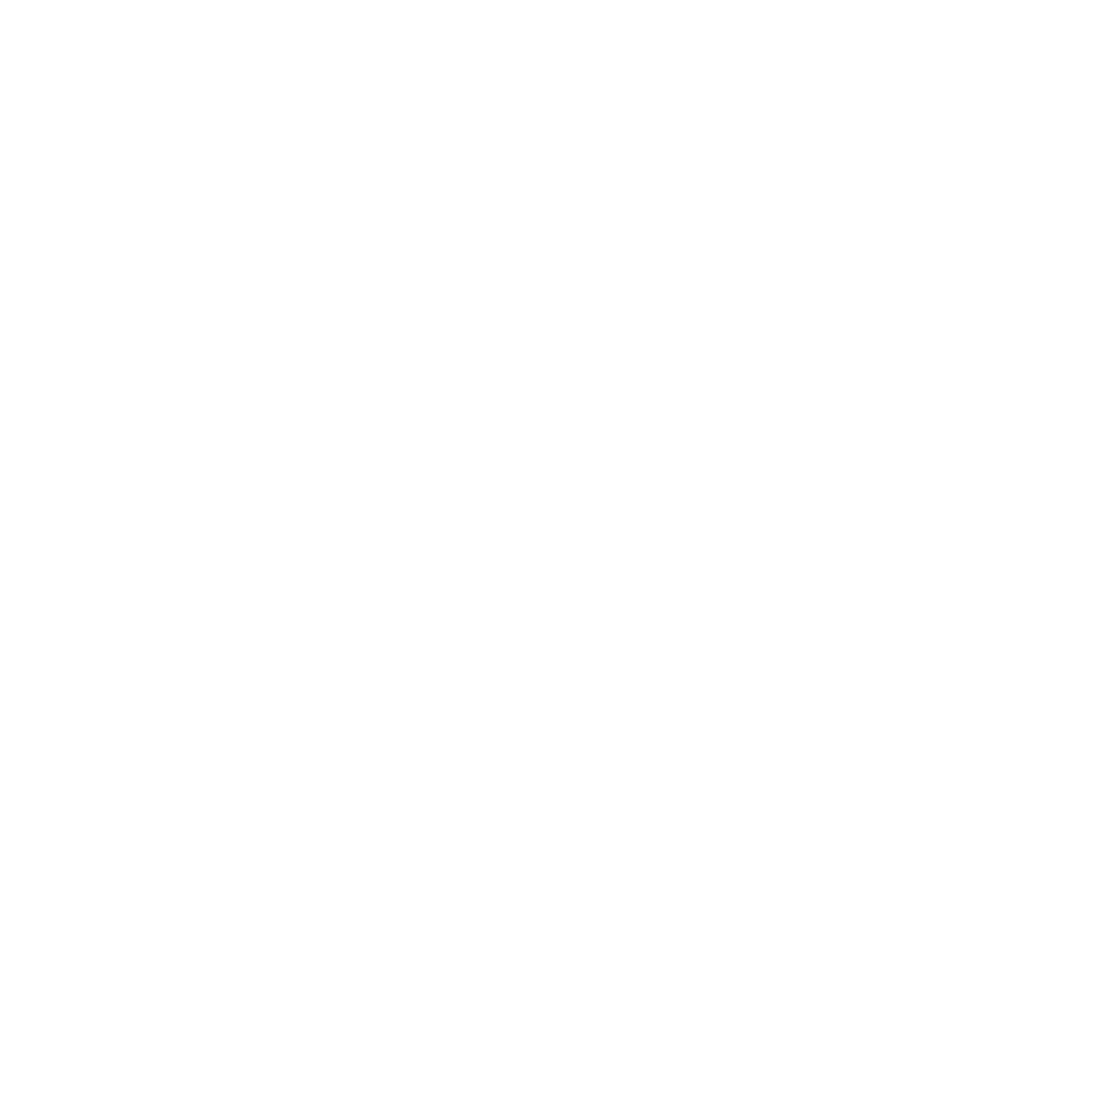 Cintamind logo White - Thin